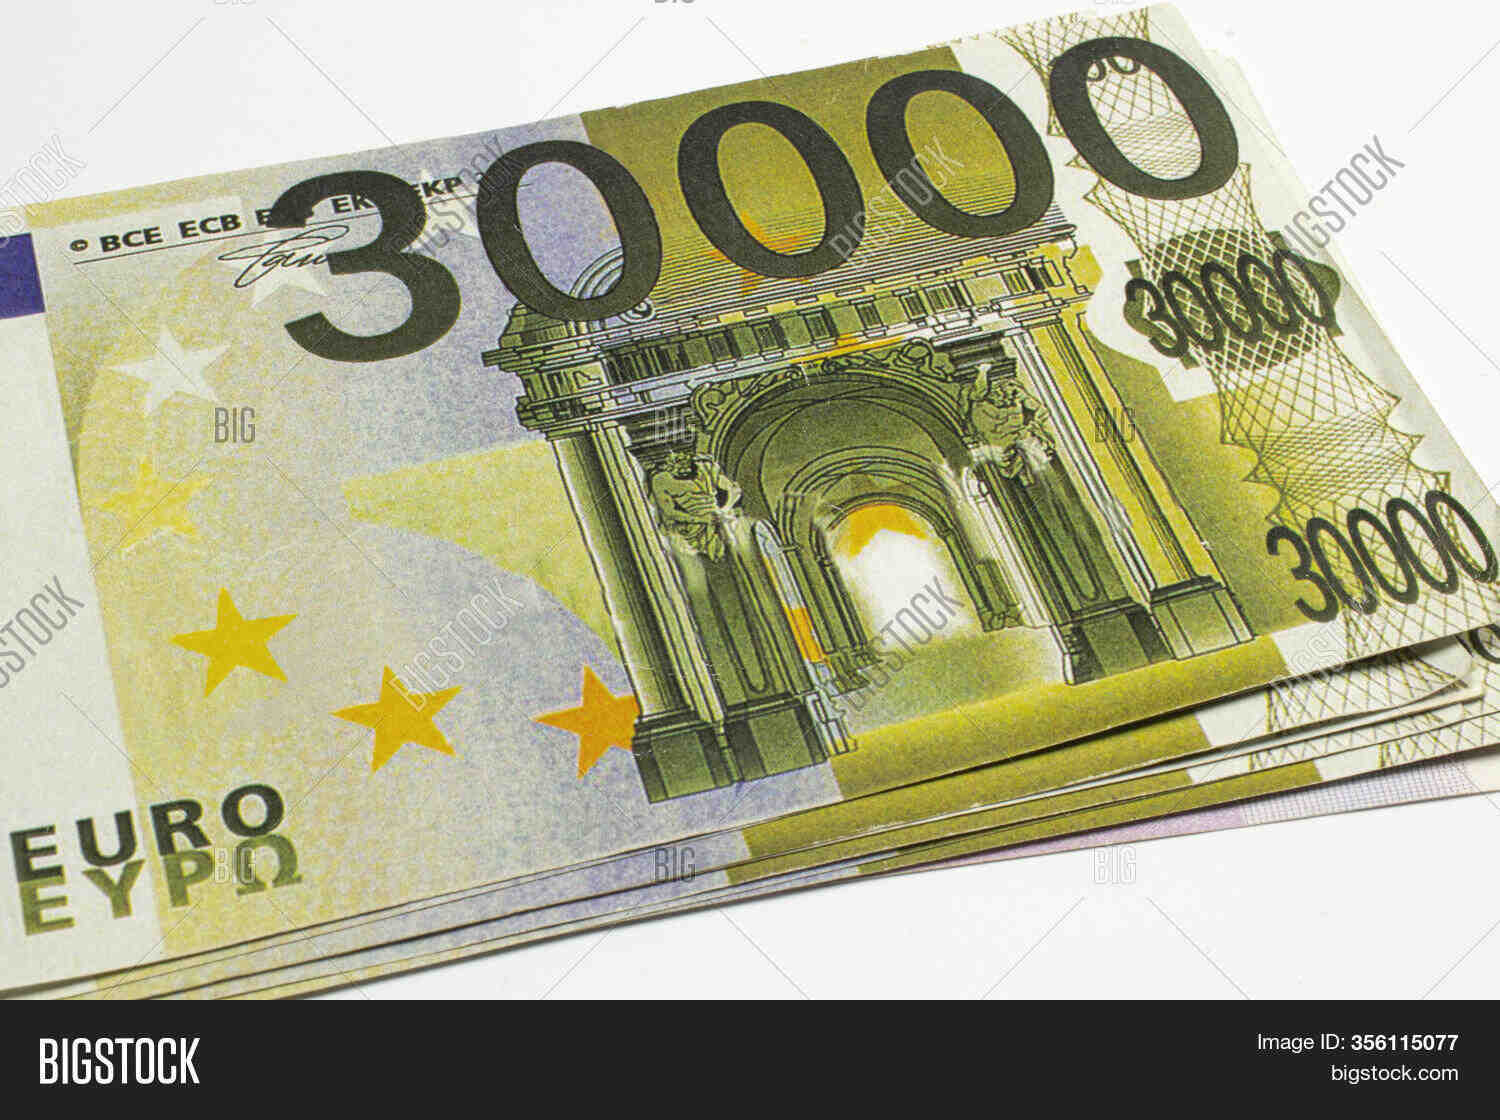 Quel apport pour emprunter 20 000 euros ?